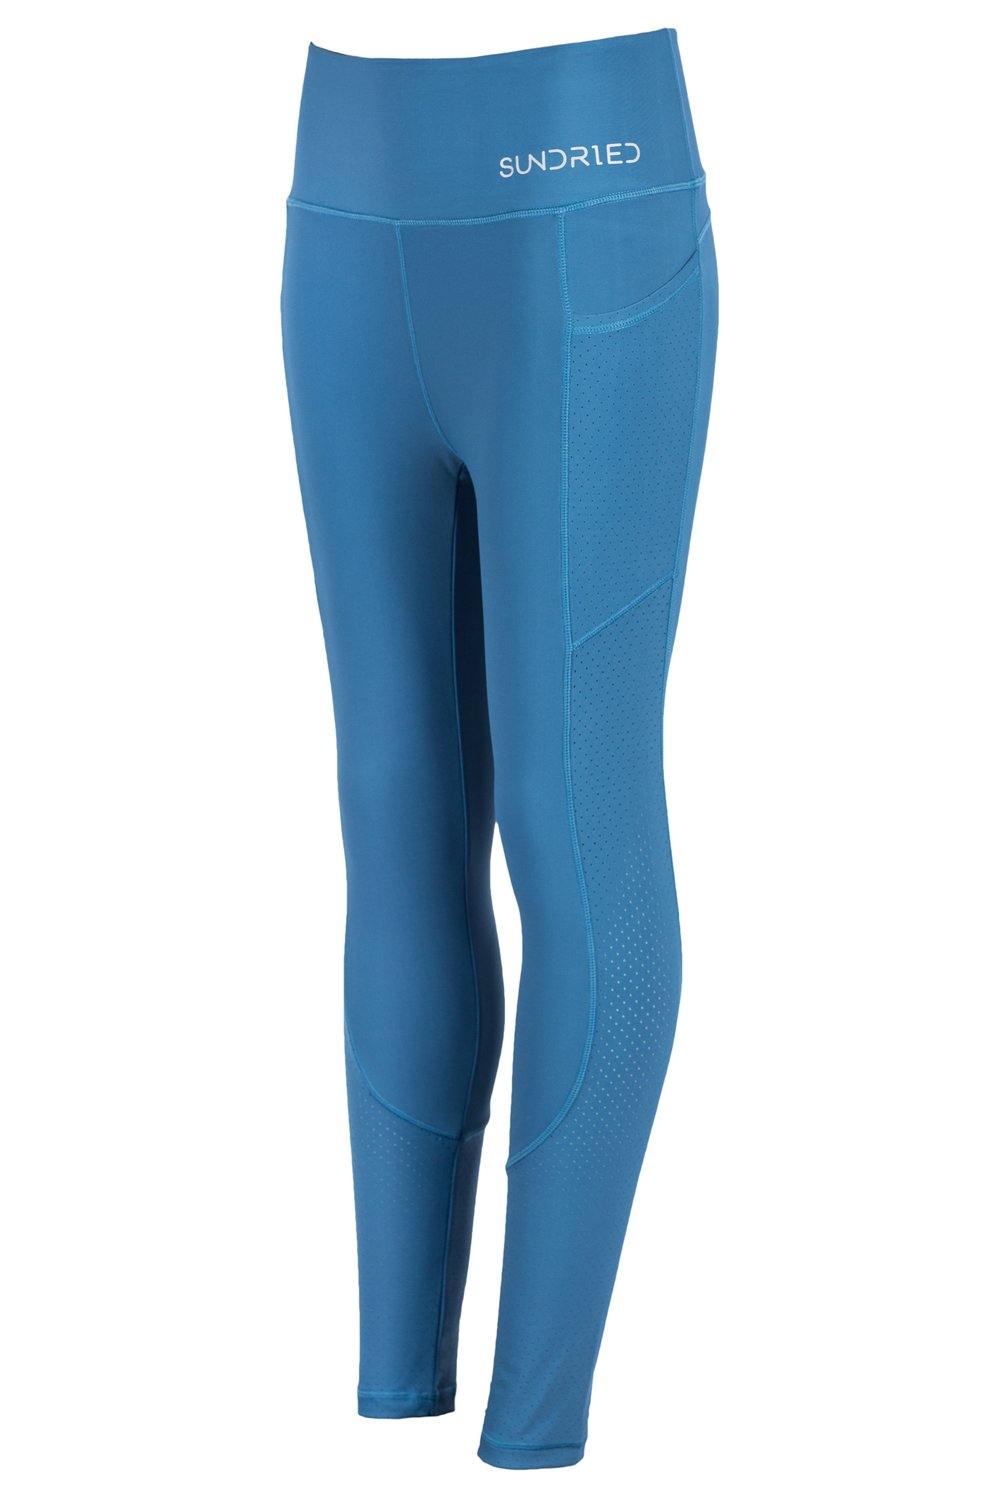 Sundried Infinity Women's Leggings Leggings L Blue SD0156 L Blue Activewear